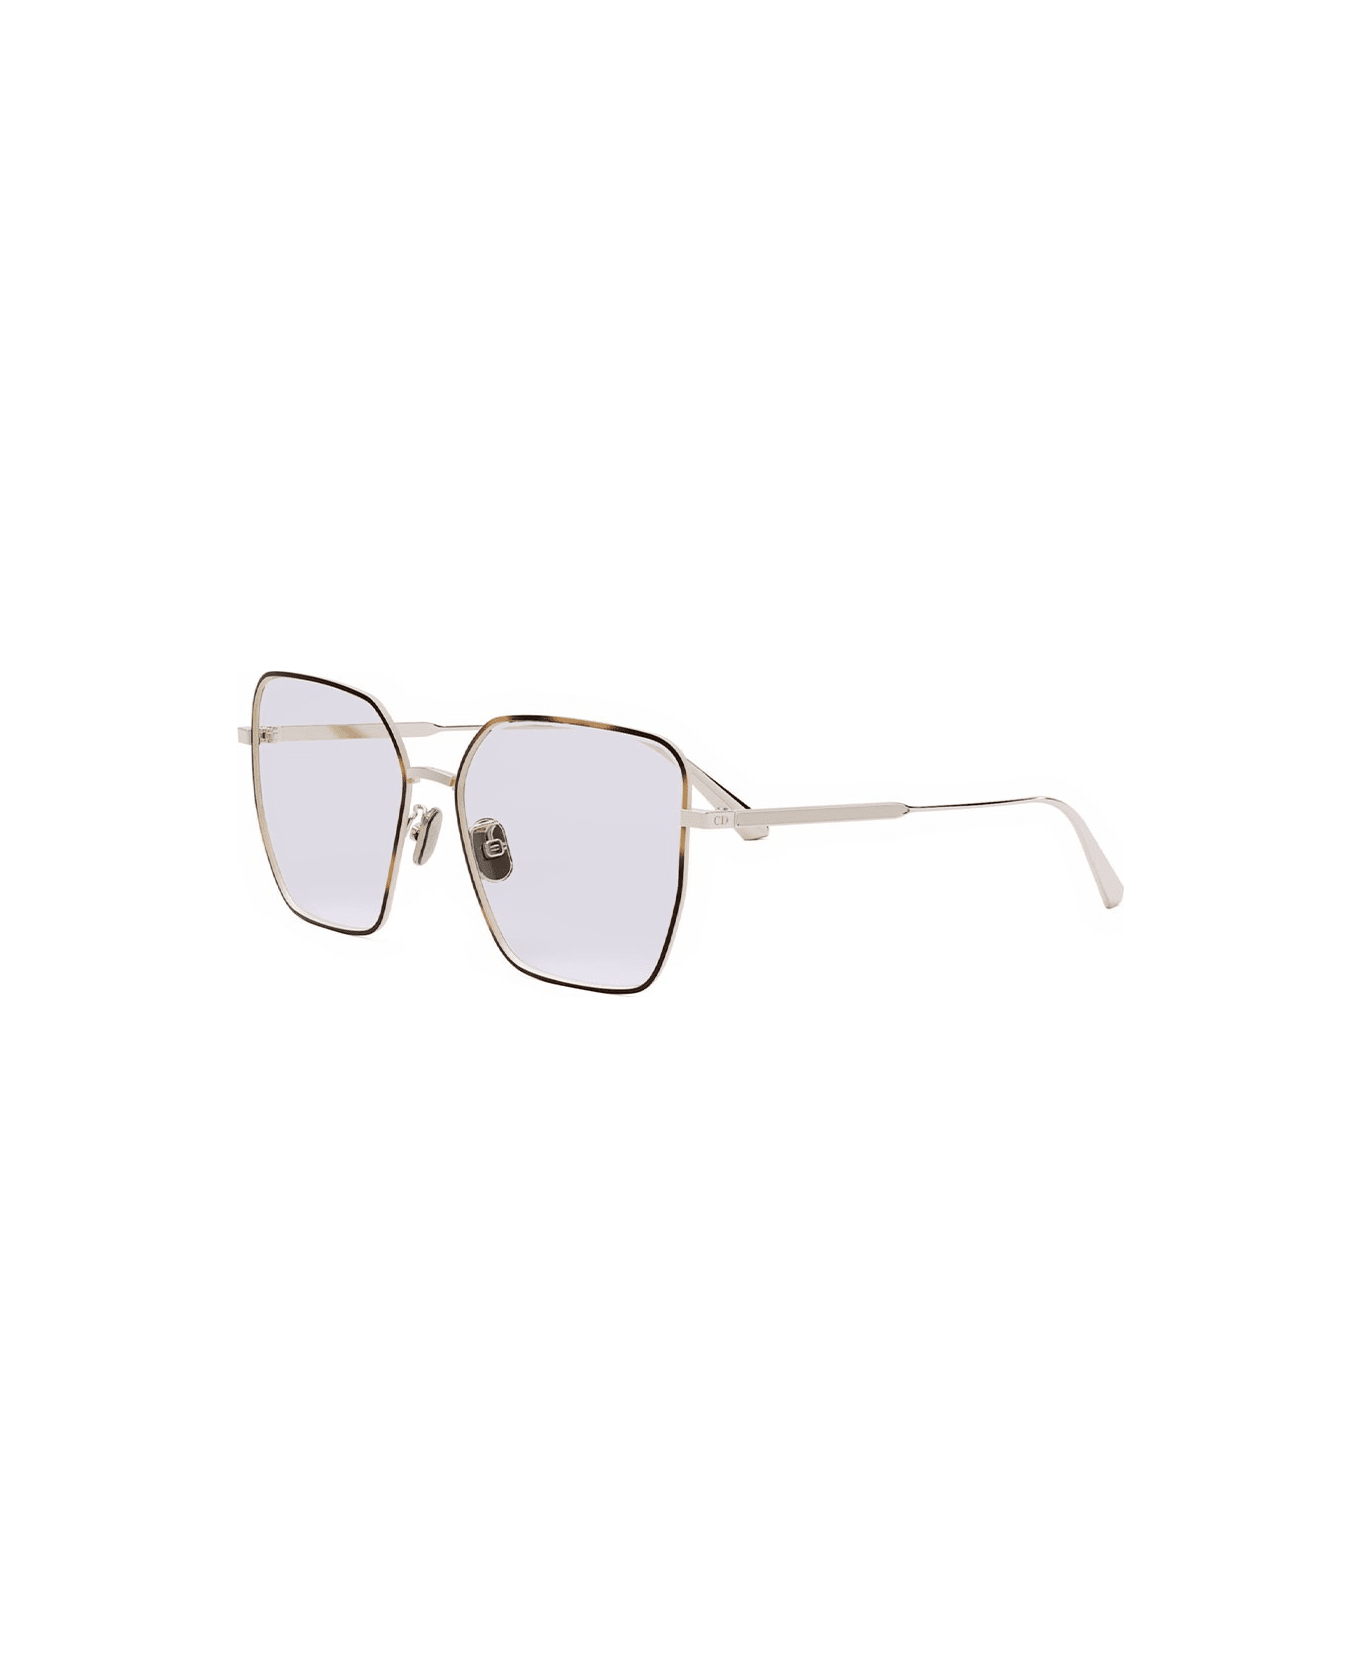 Dior Eyewear Glasses - Argento